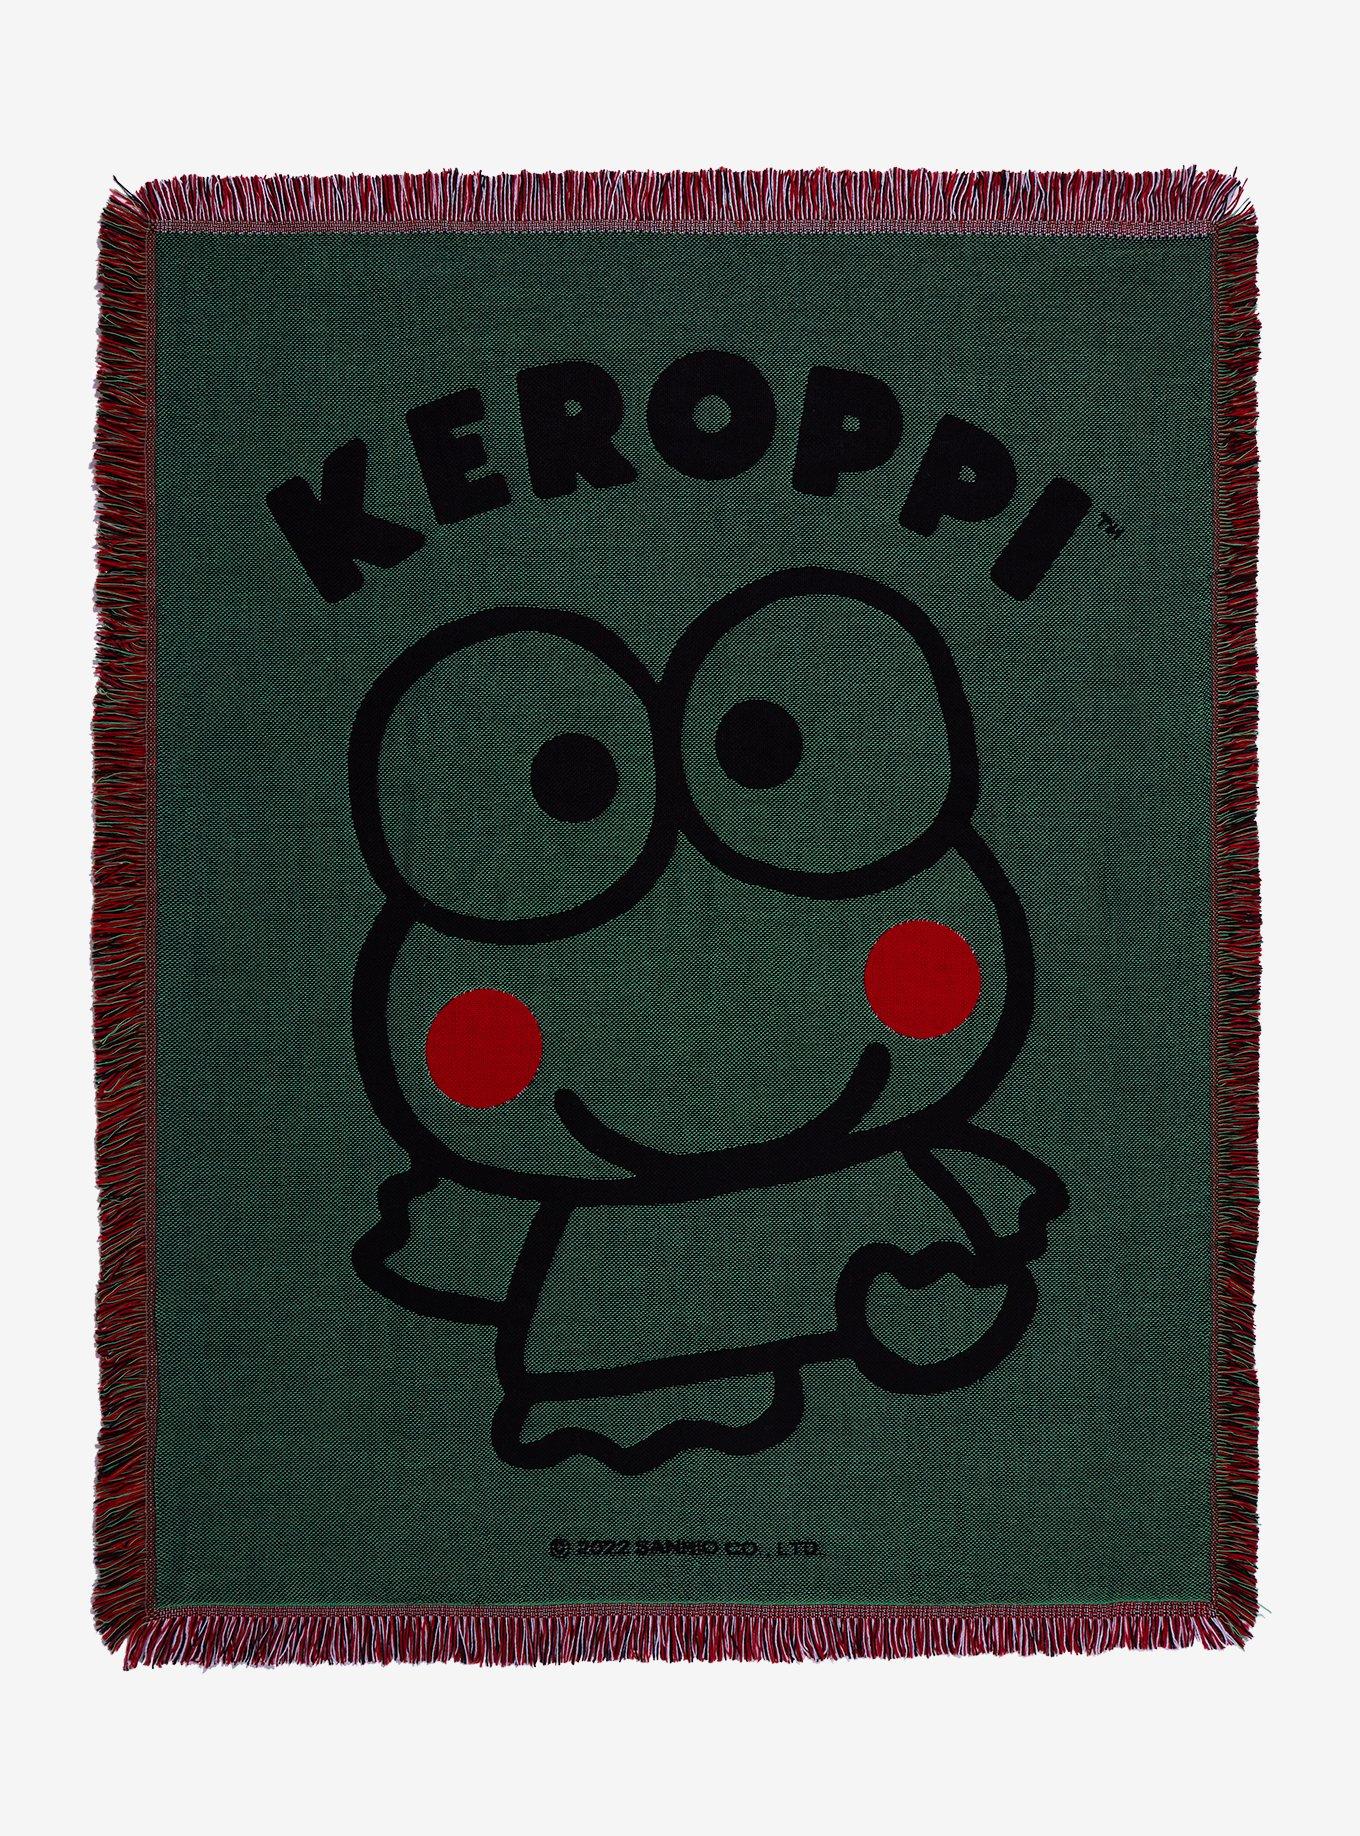 Sanrio Keroppi Jacquard Tapestry Throw